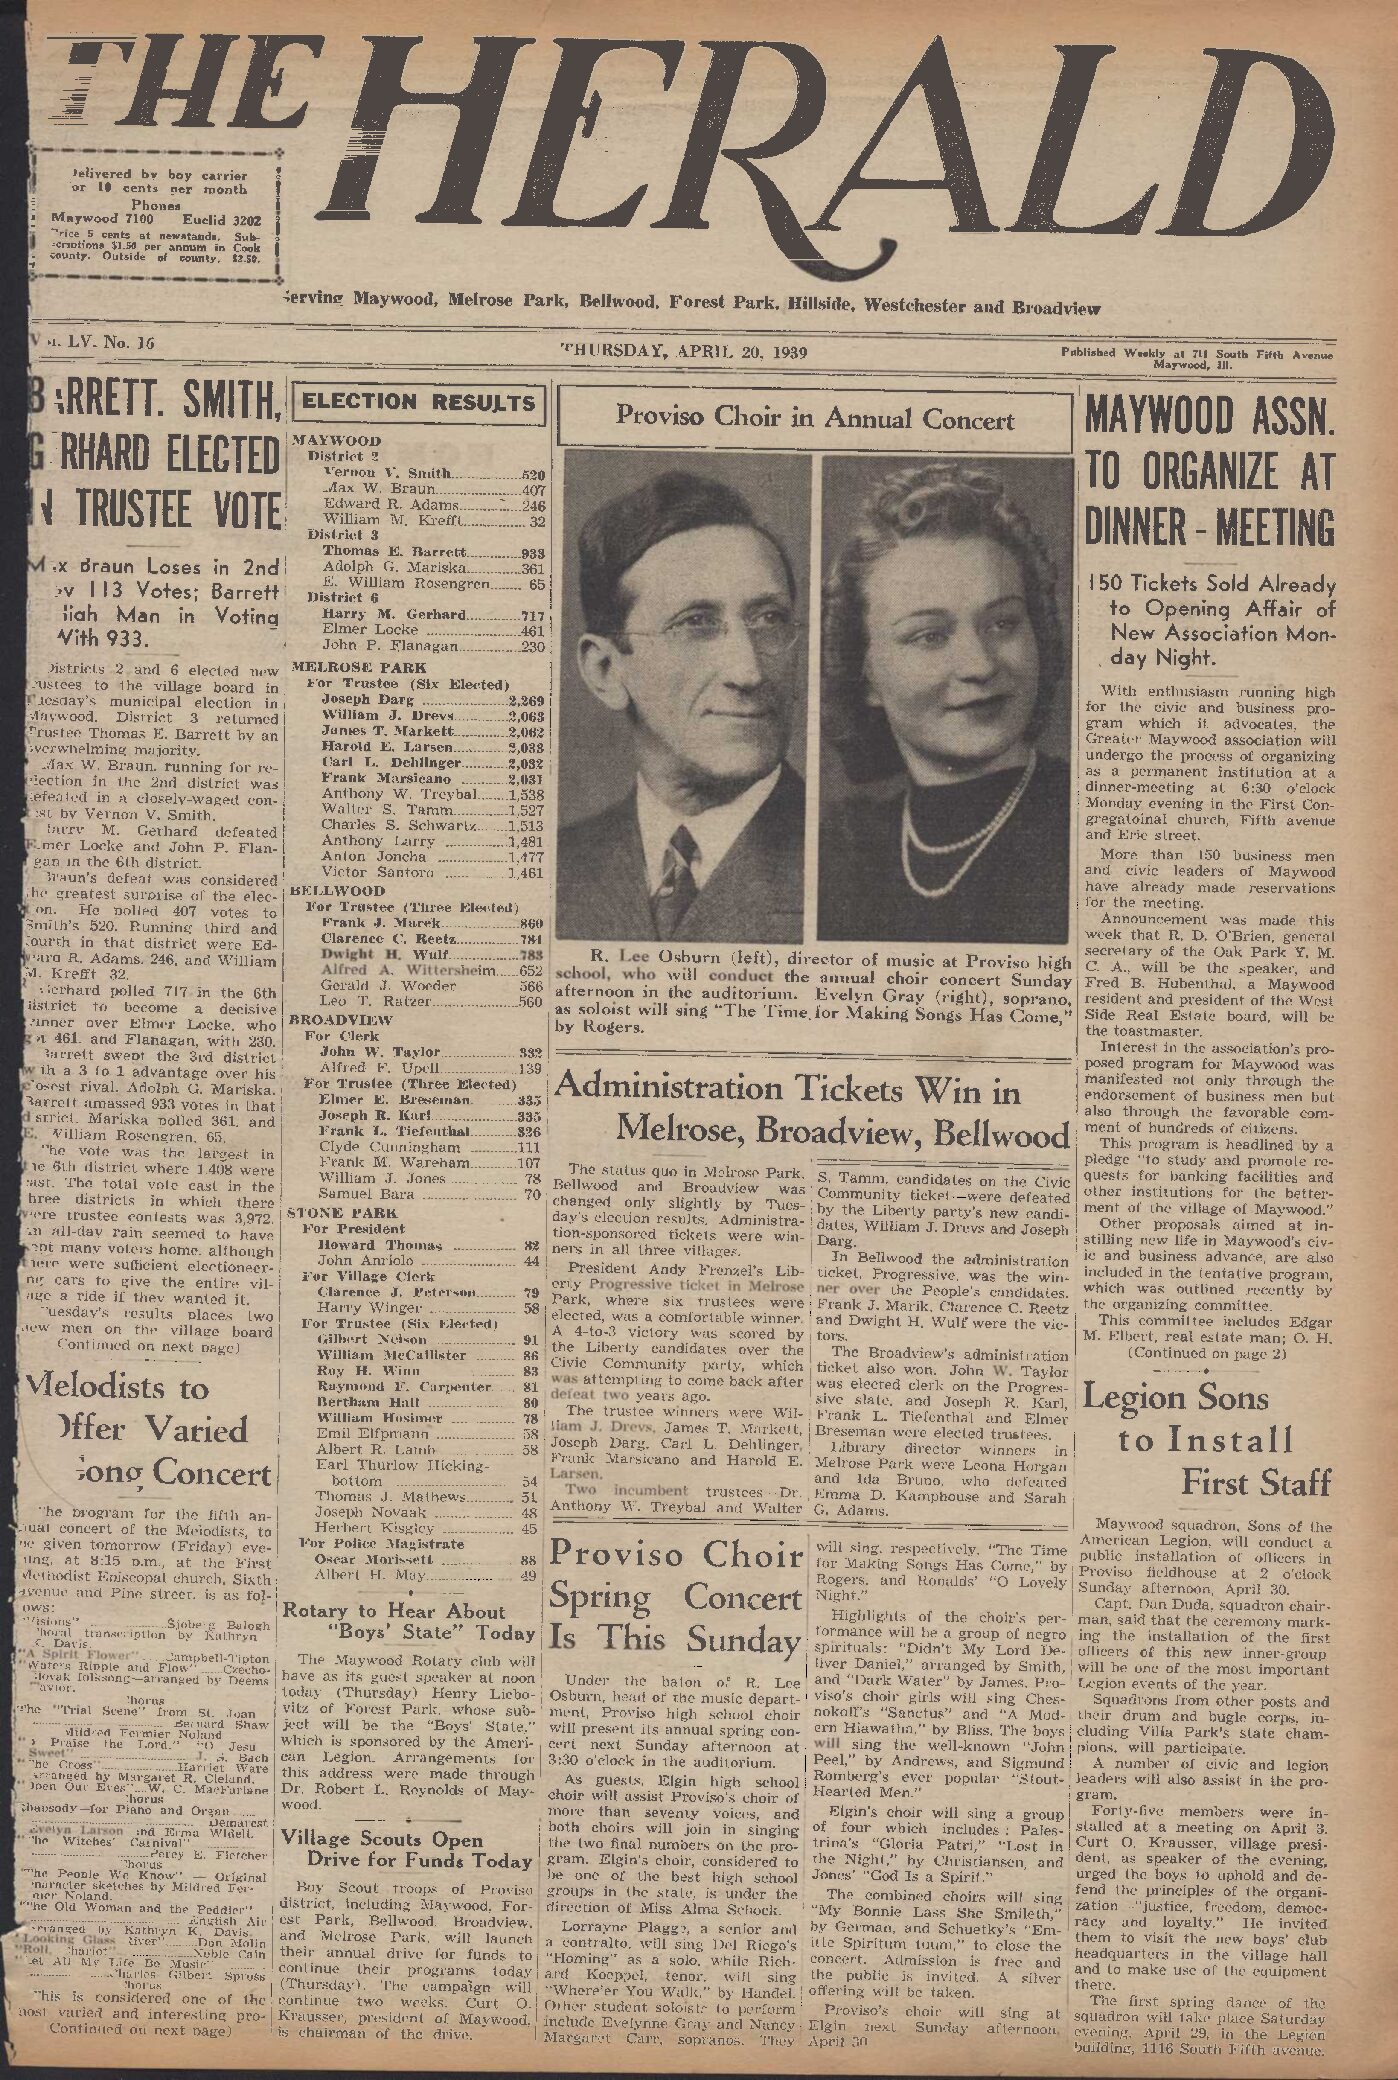 The Herald – 19390420